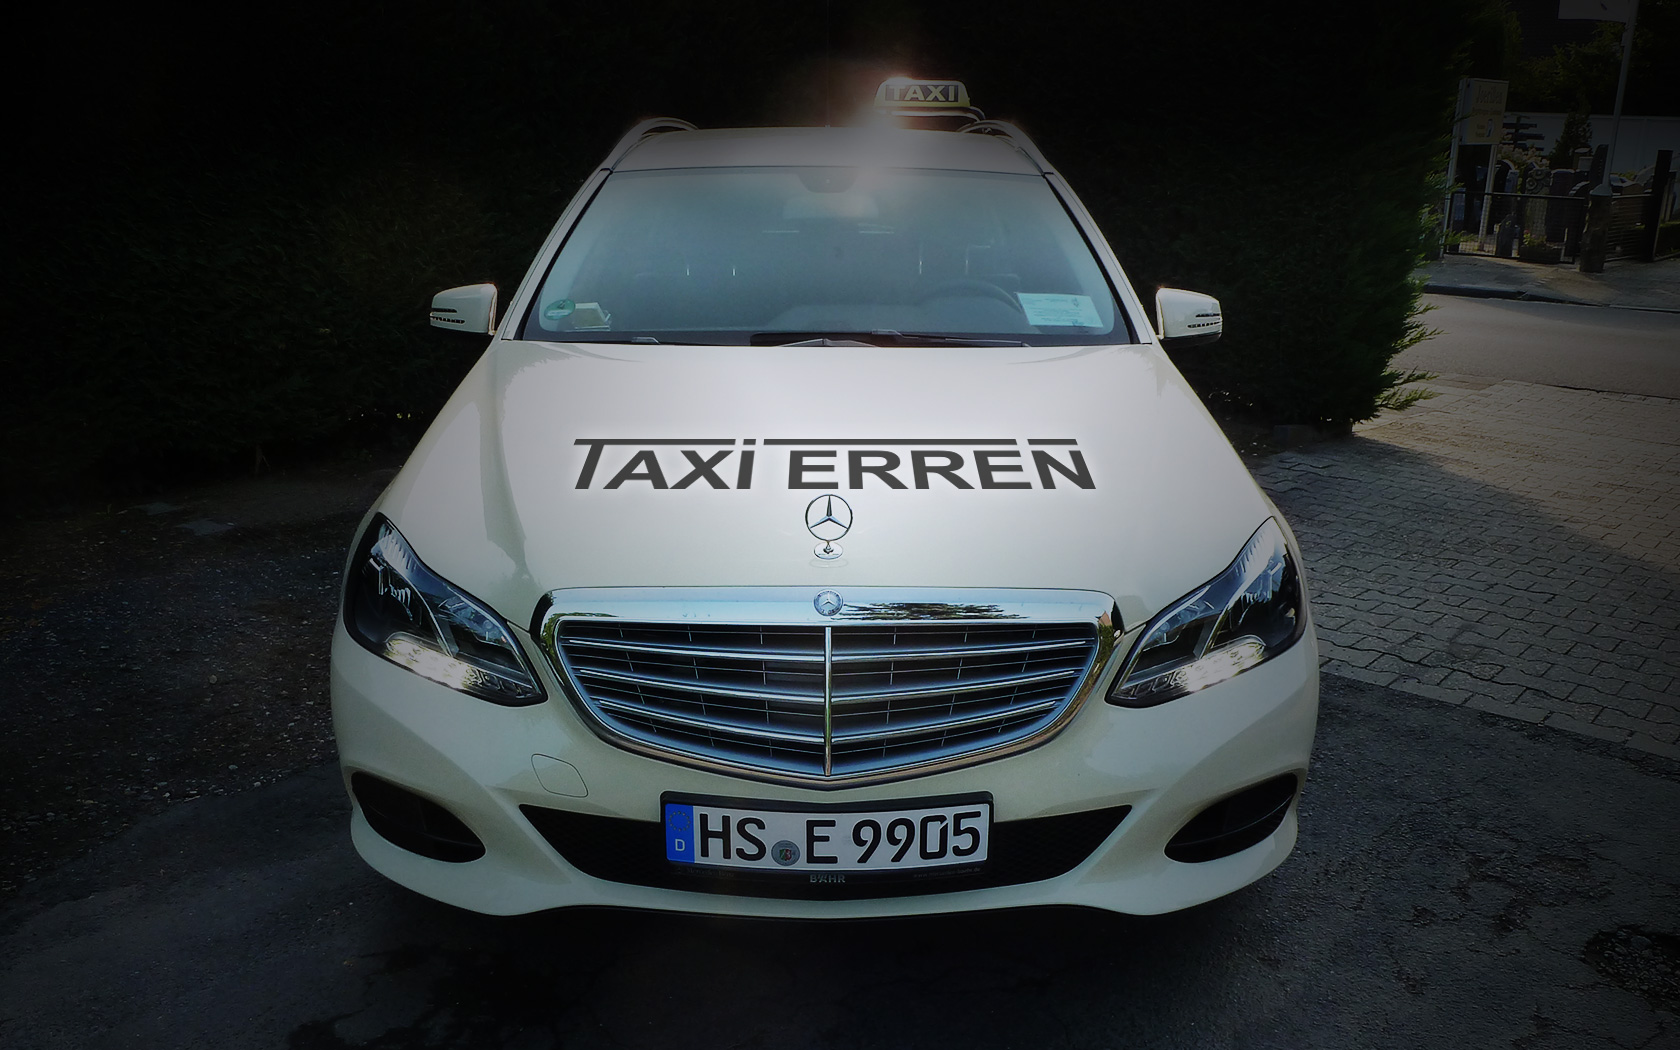 Taxi Erren Taxi